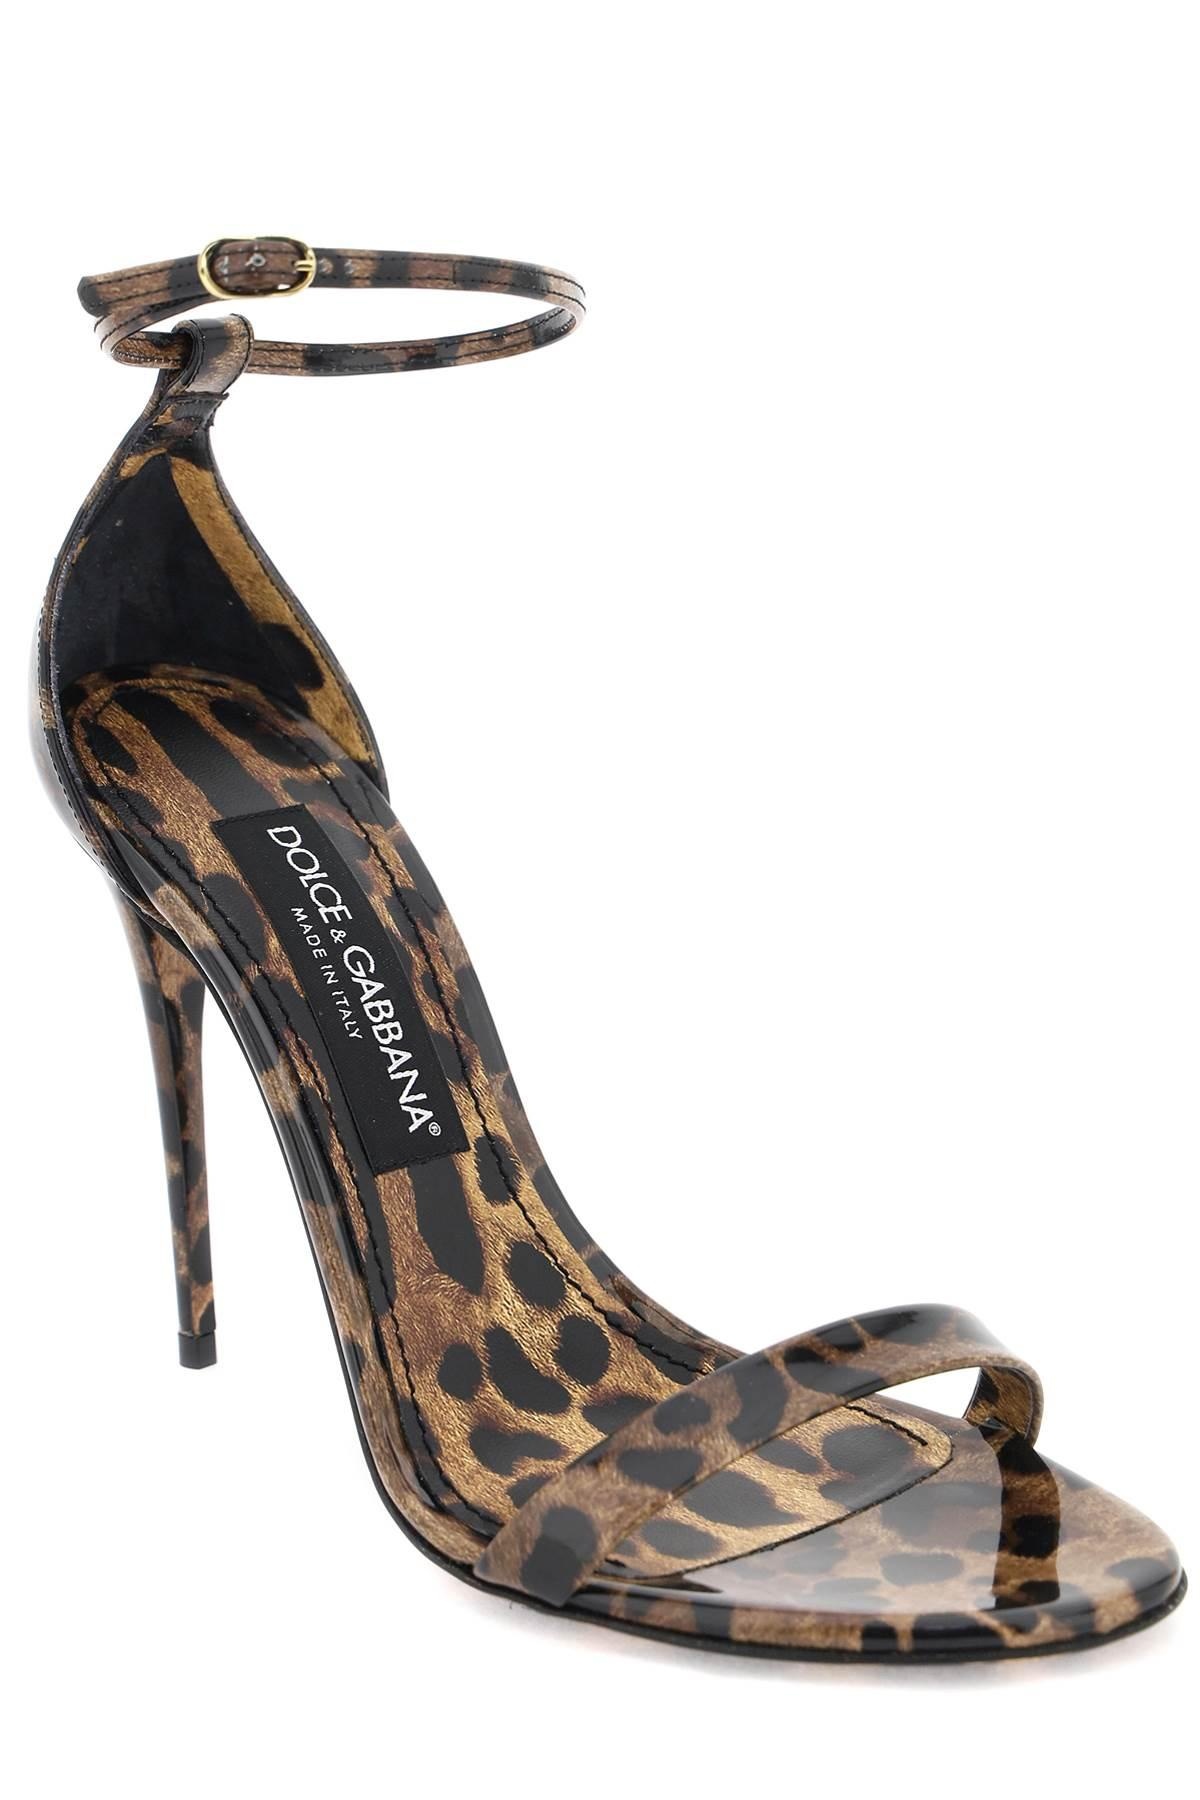 Dolce & Gabbana Leopard Print Glossy Leather Sandals - 4